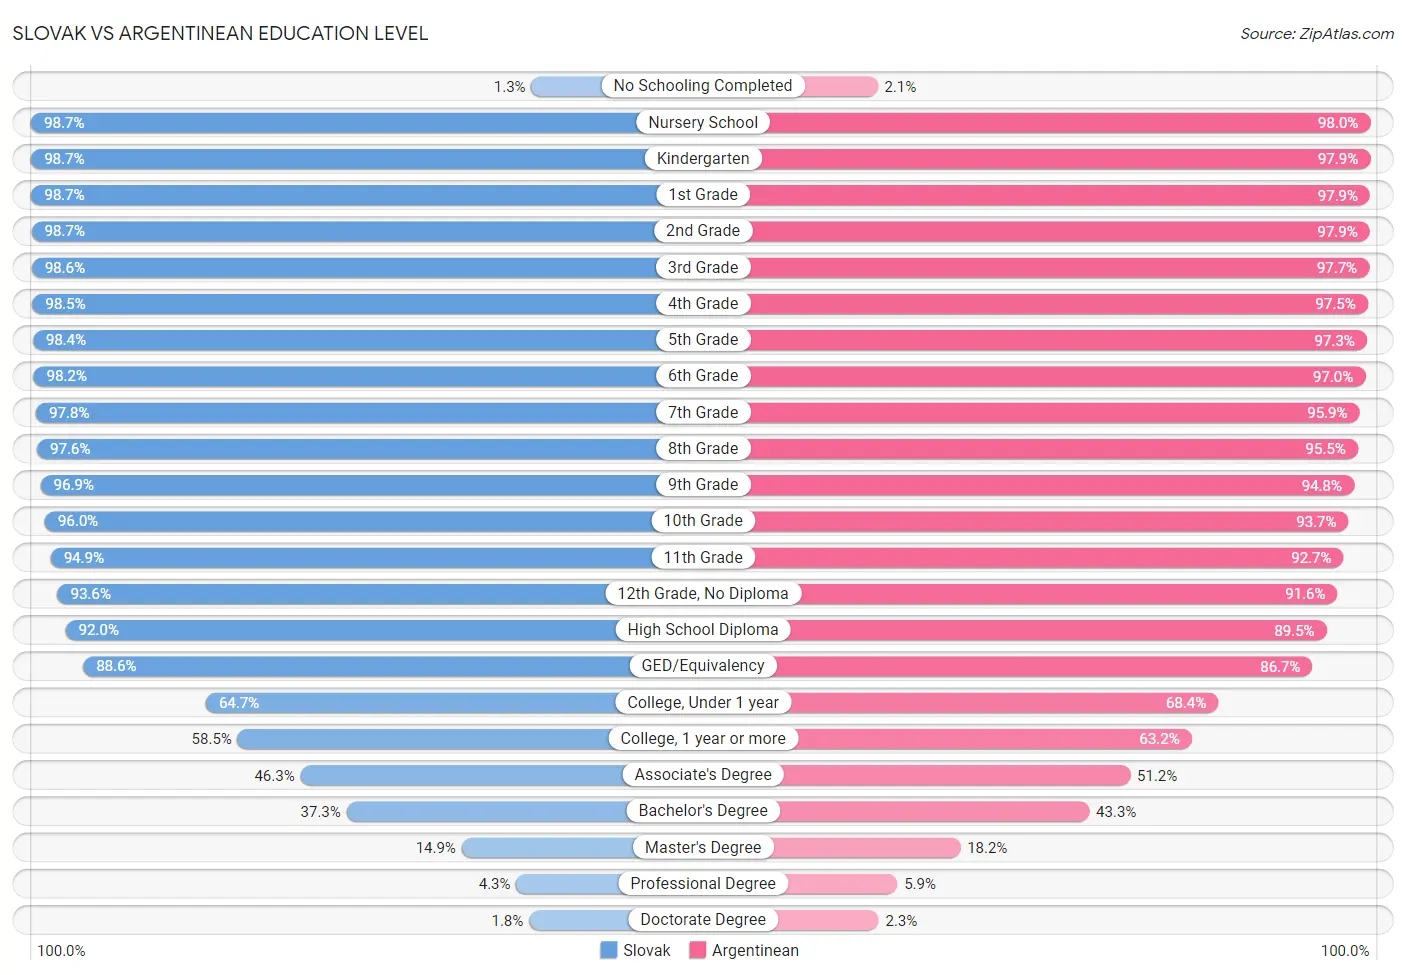 Slovak vs Argentinean Education Level